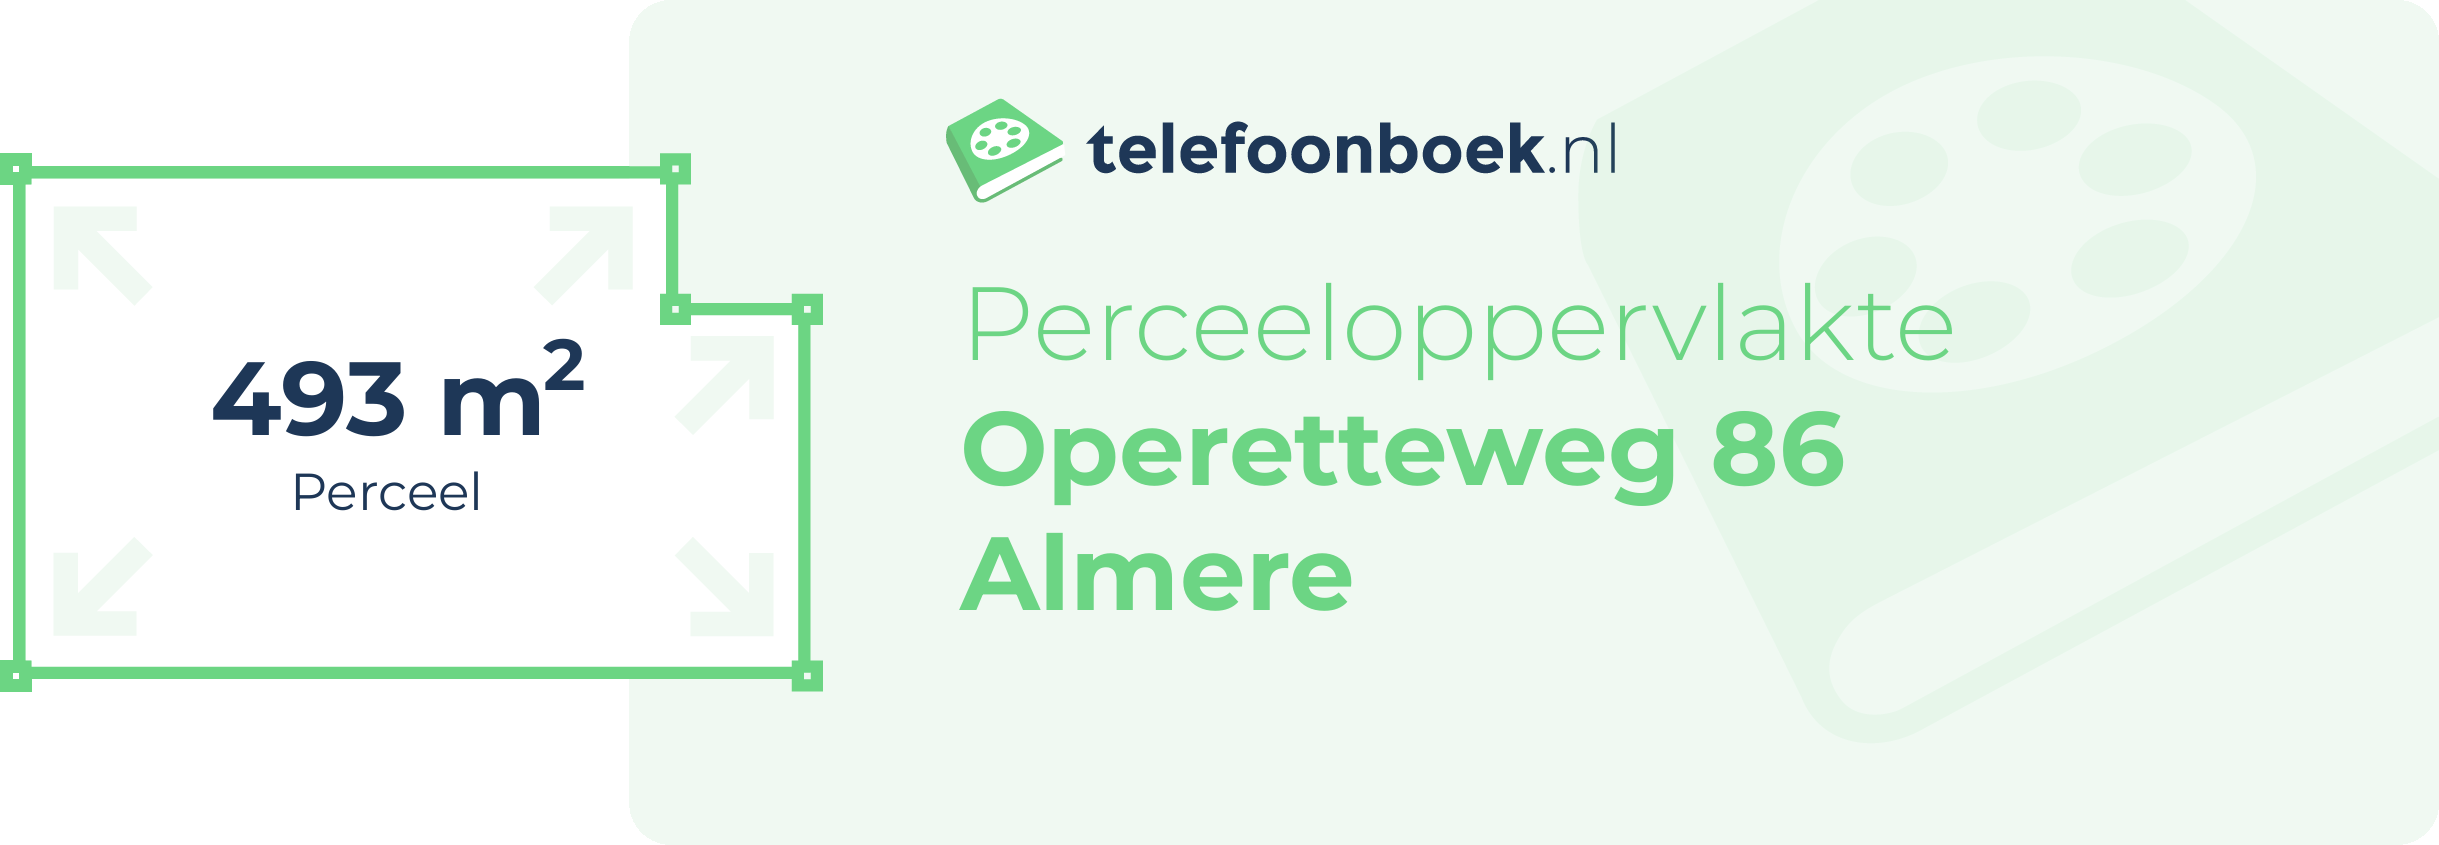 Perceeloppervlakte Operetteweg 86 Almere